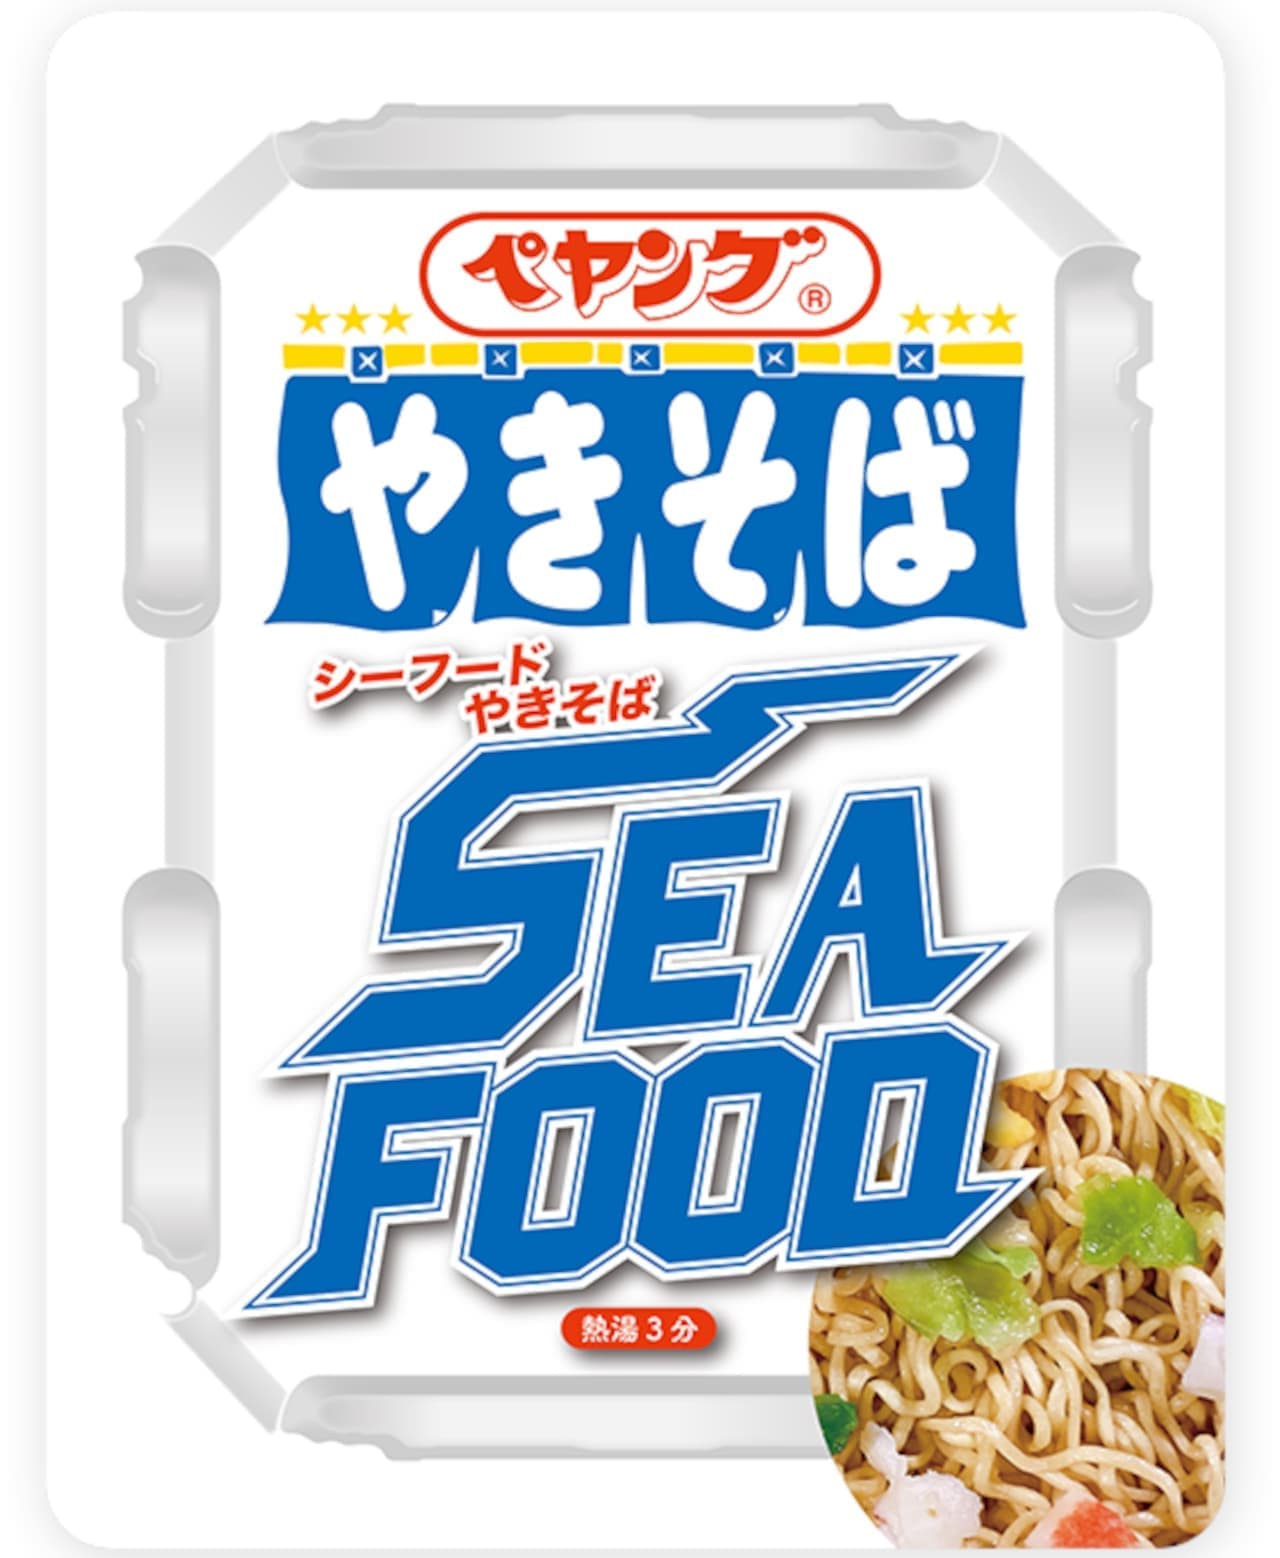 Maruka Foods "Peyoung Seafood Yakisoba"